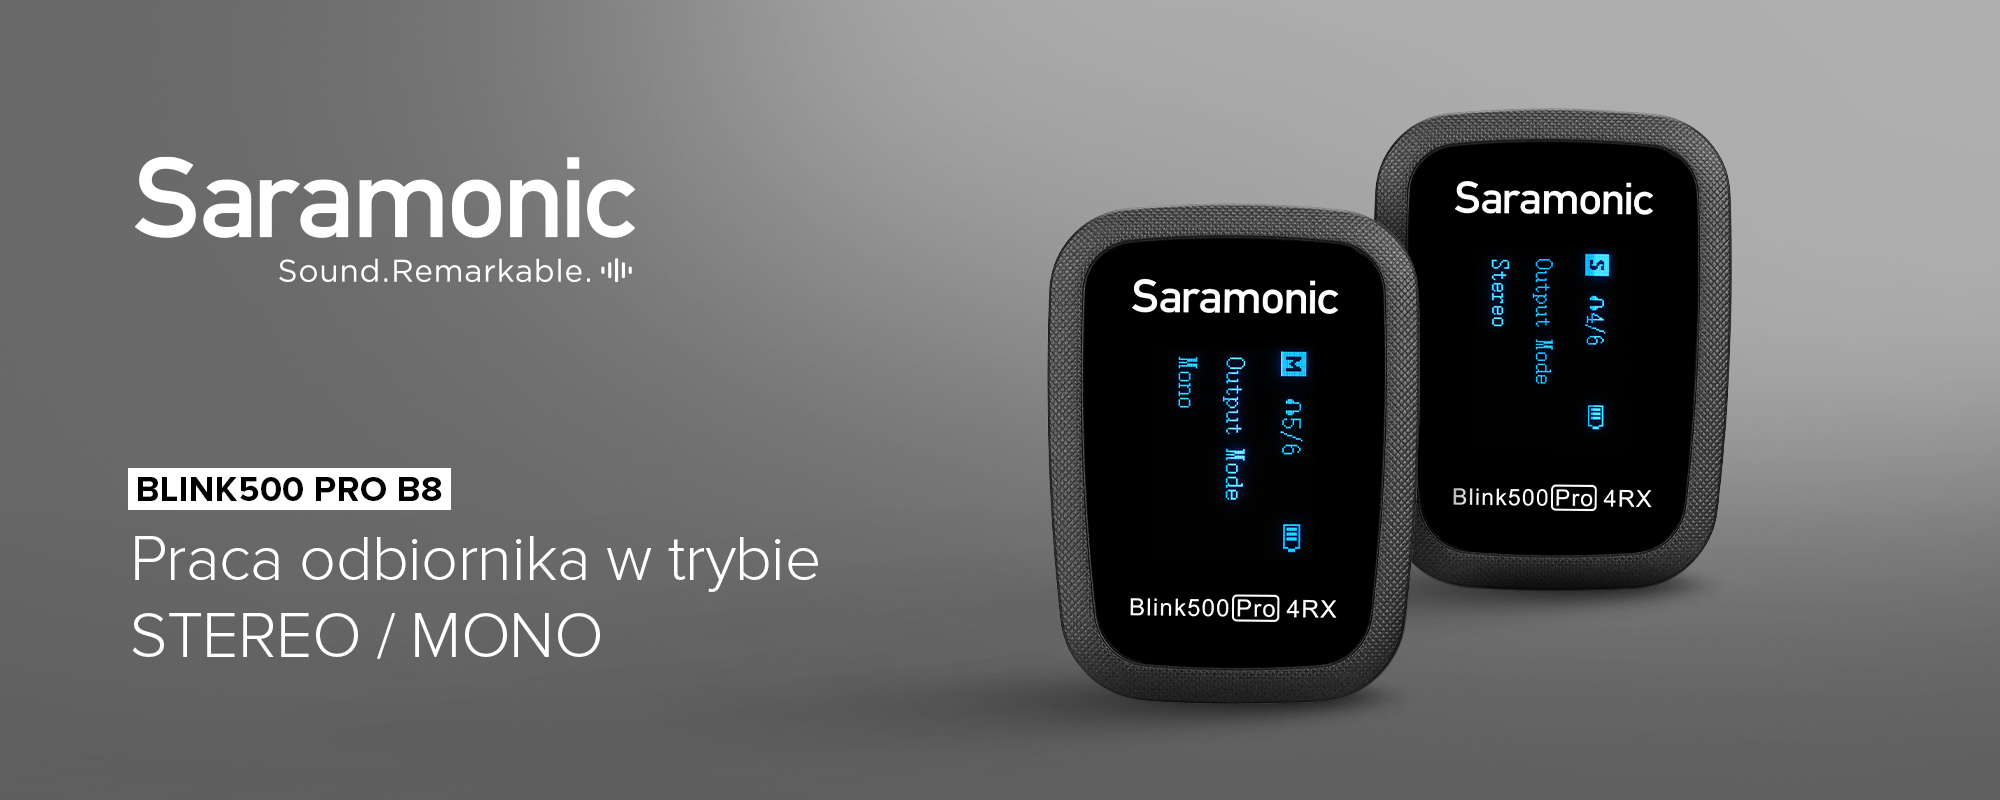 Zestaw Saramonic Blink500 Pro B8